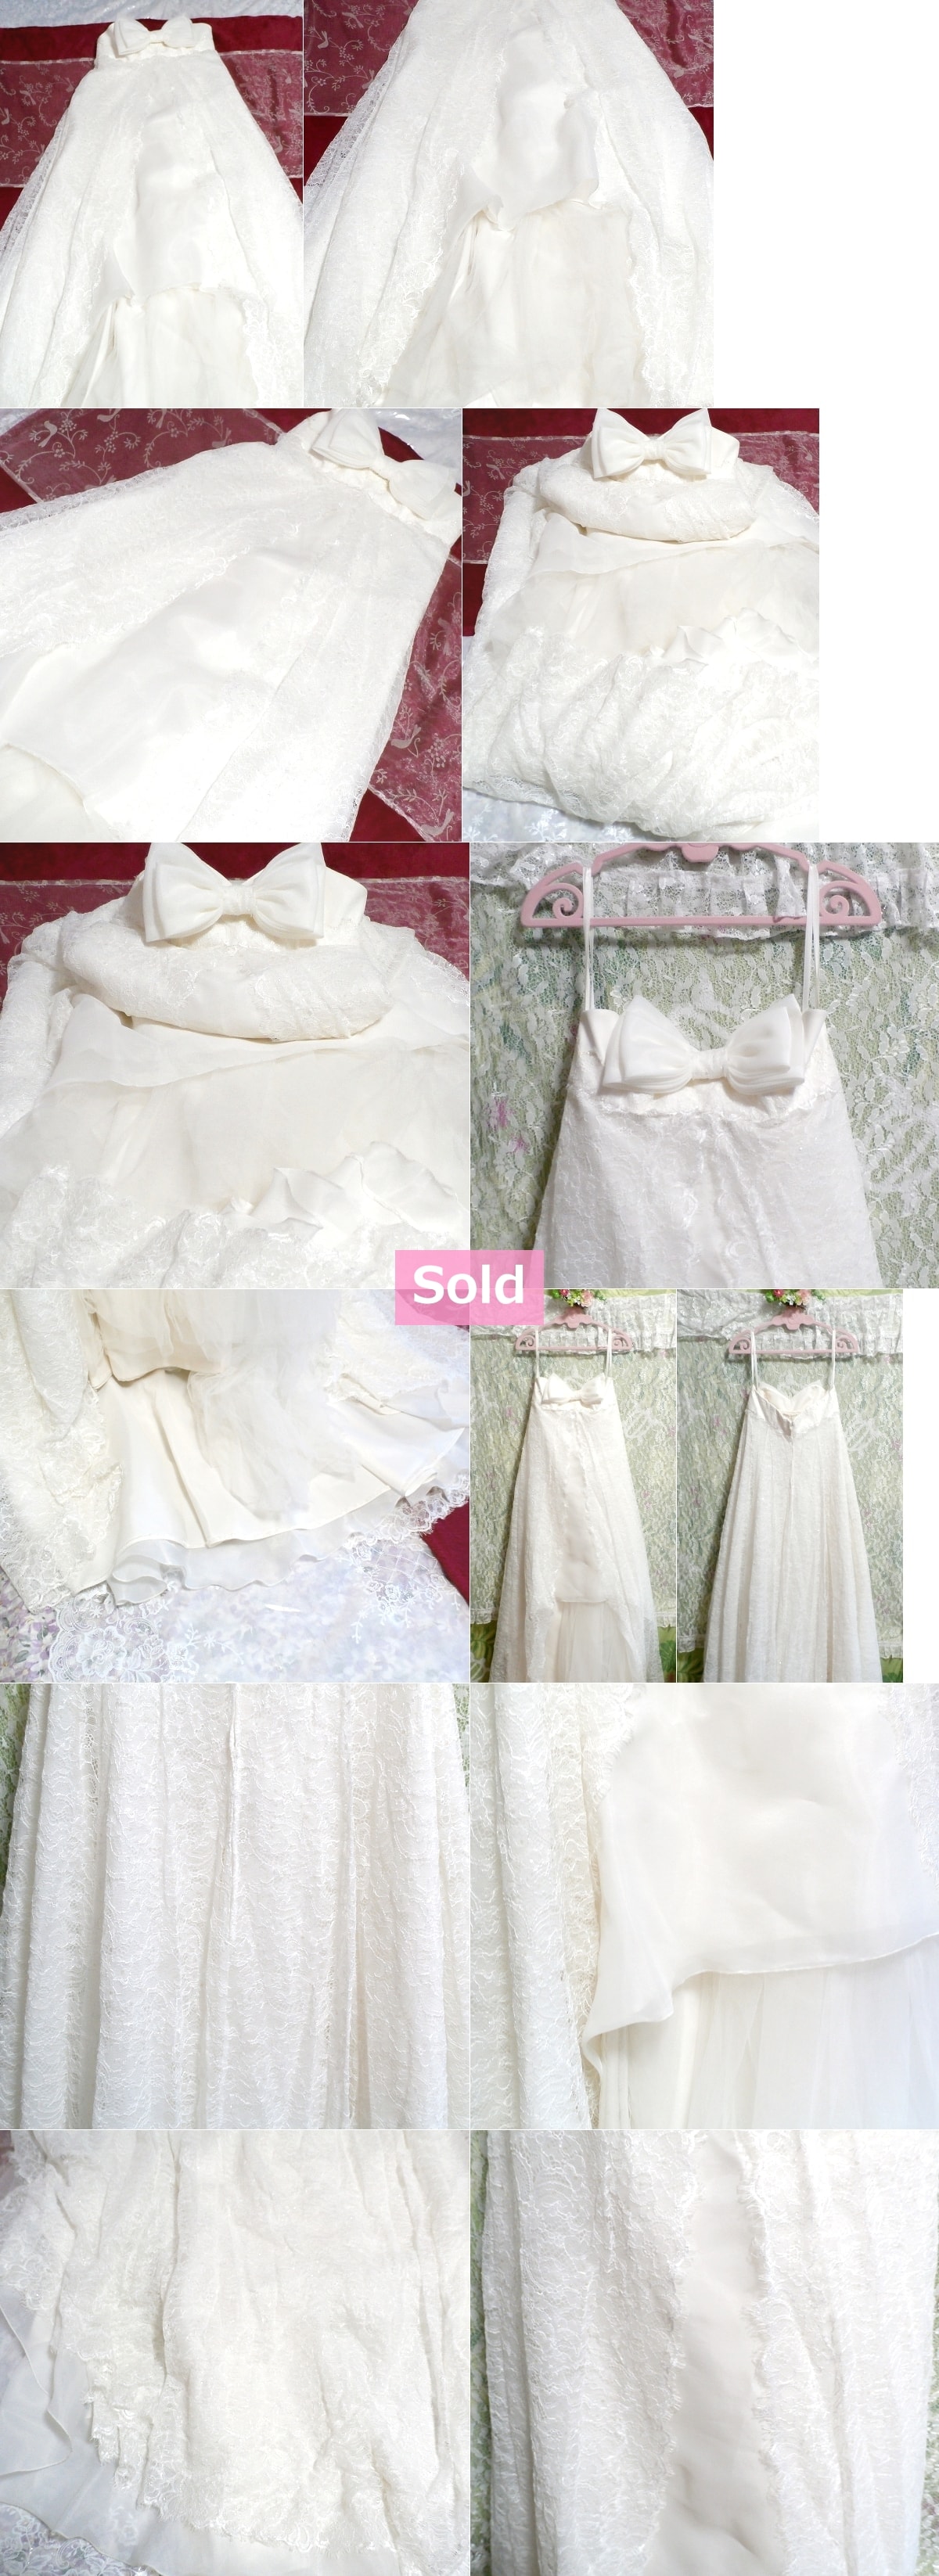 A Liliale 美しい白レースホワイトリボンウエディングドレス/マキシワンピース Beautiful white lace ribbon prom dress/maxi onepiece